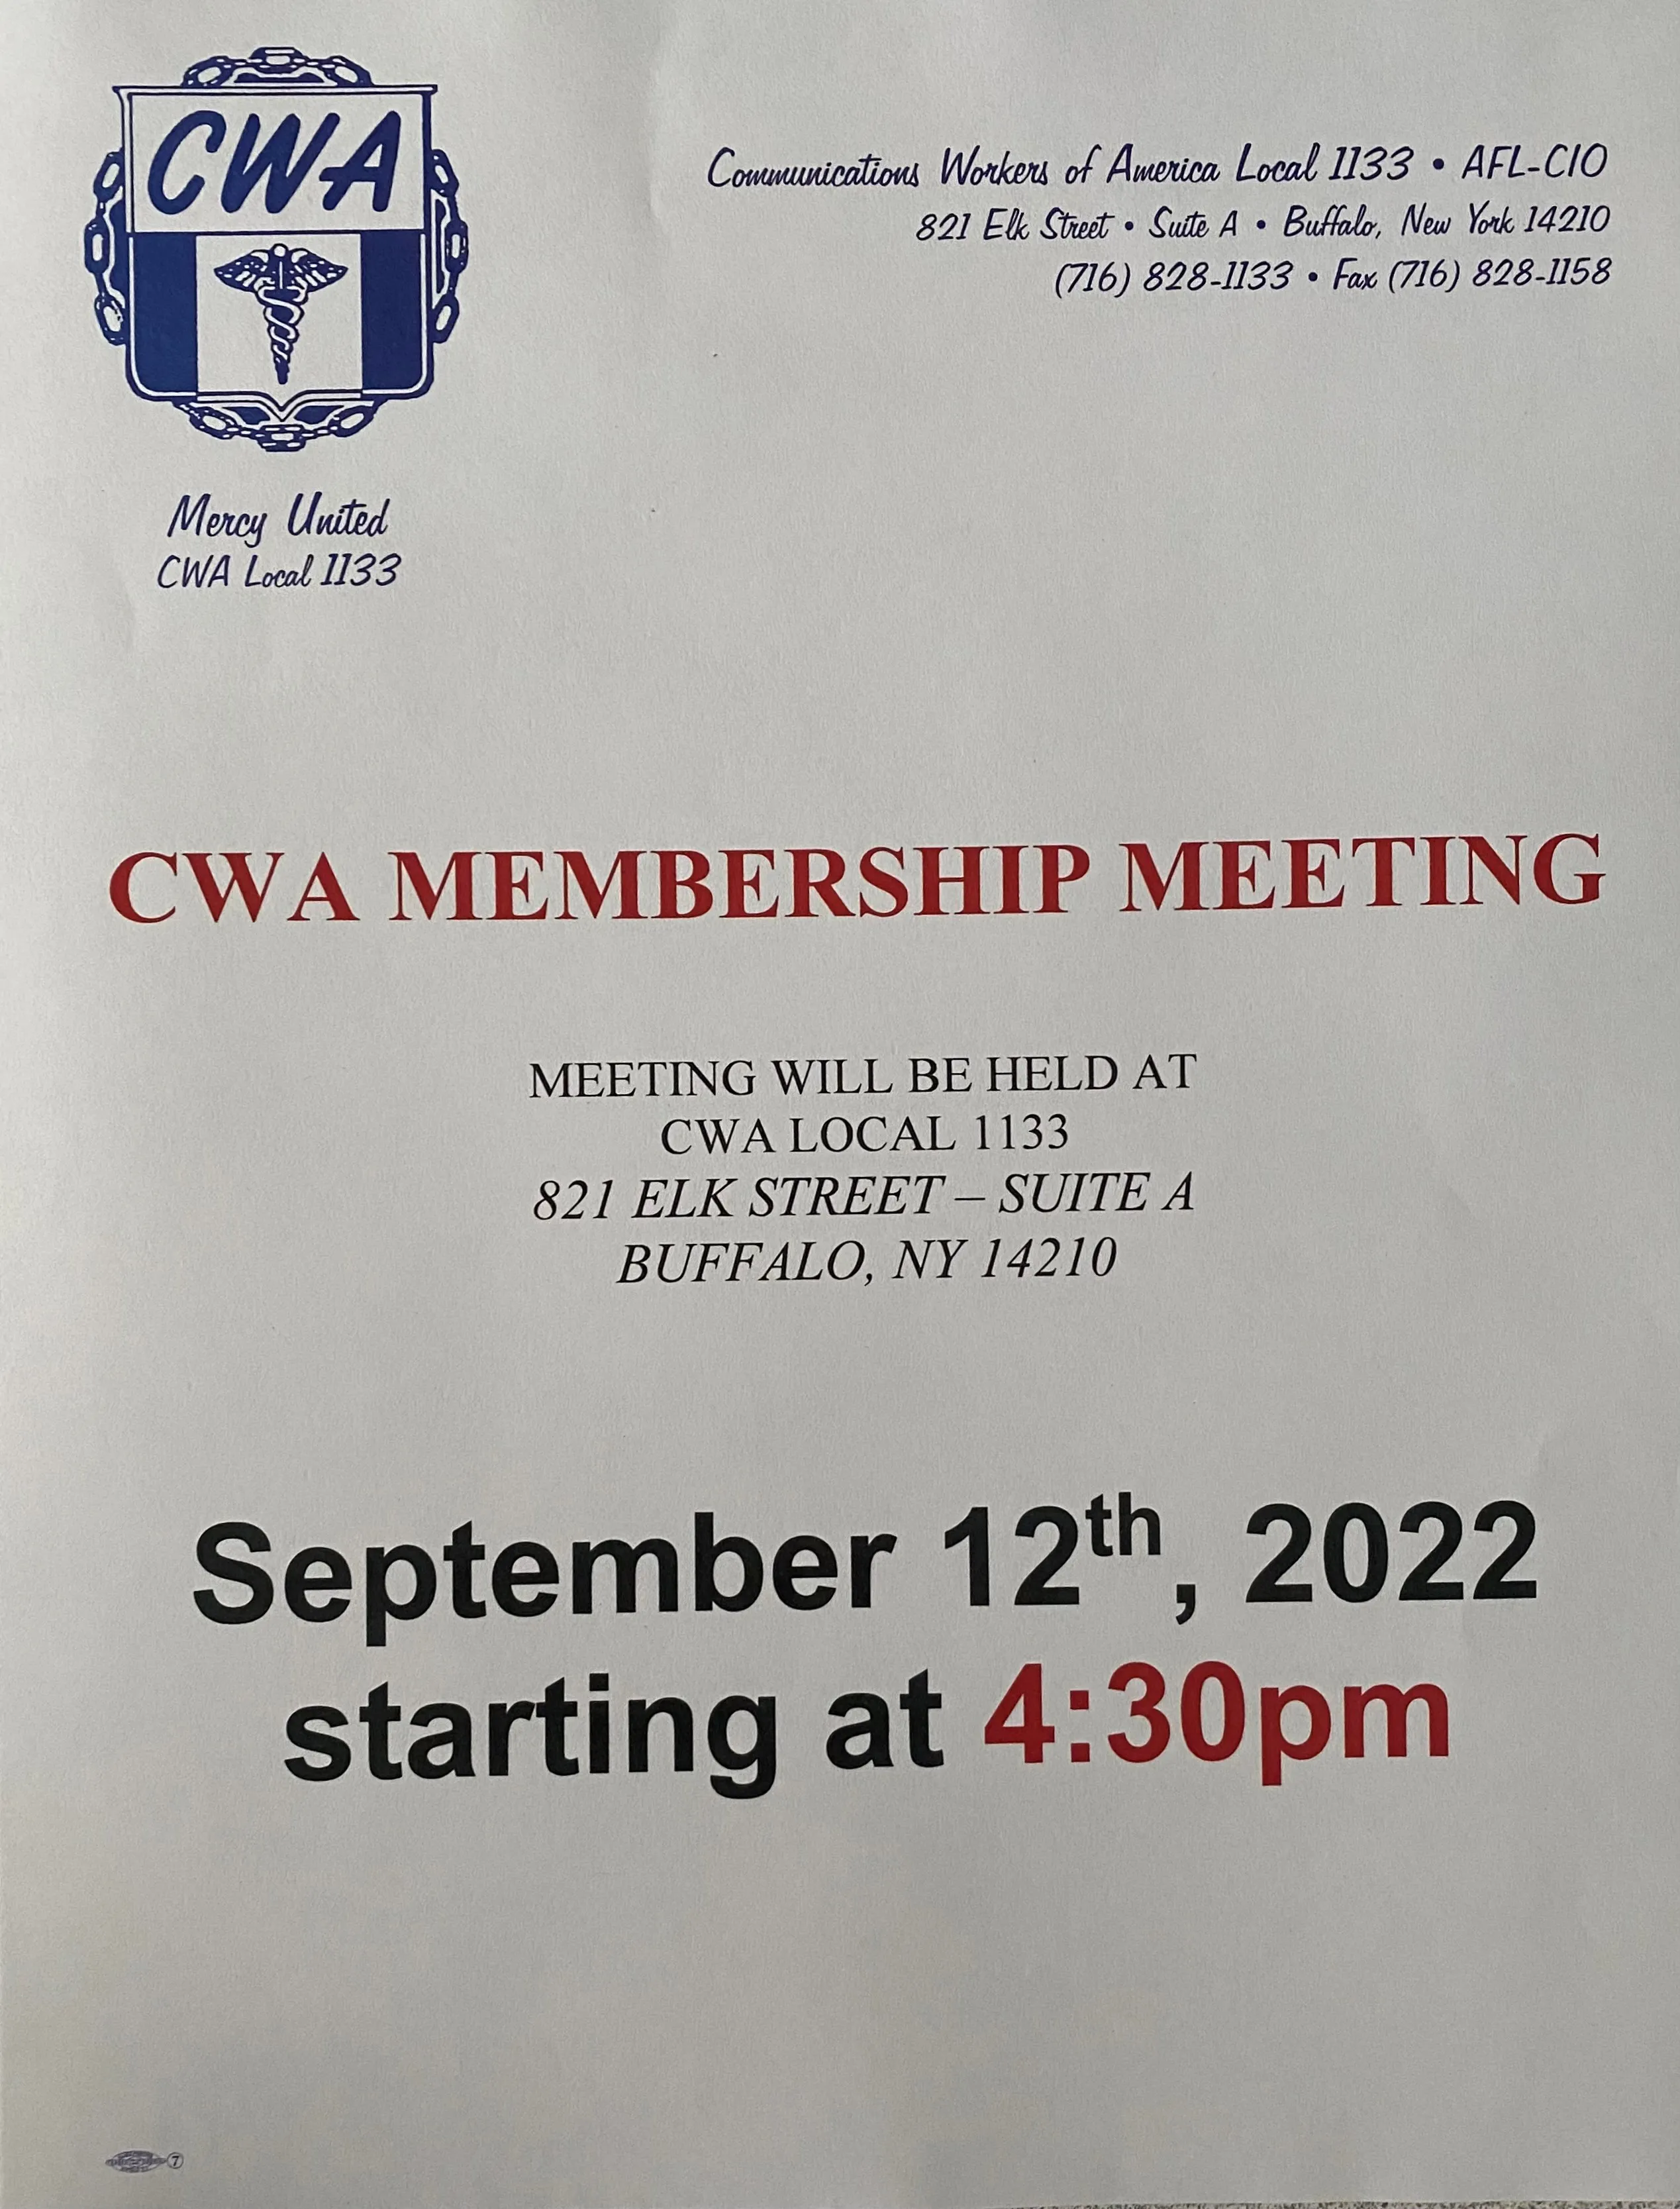 CWA LOCAL 1133 QUARTERLY MEMBERSHIP MEETING